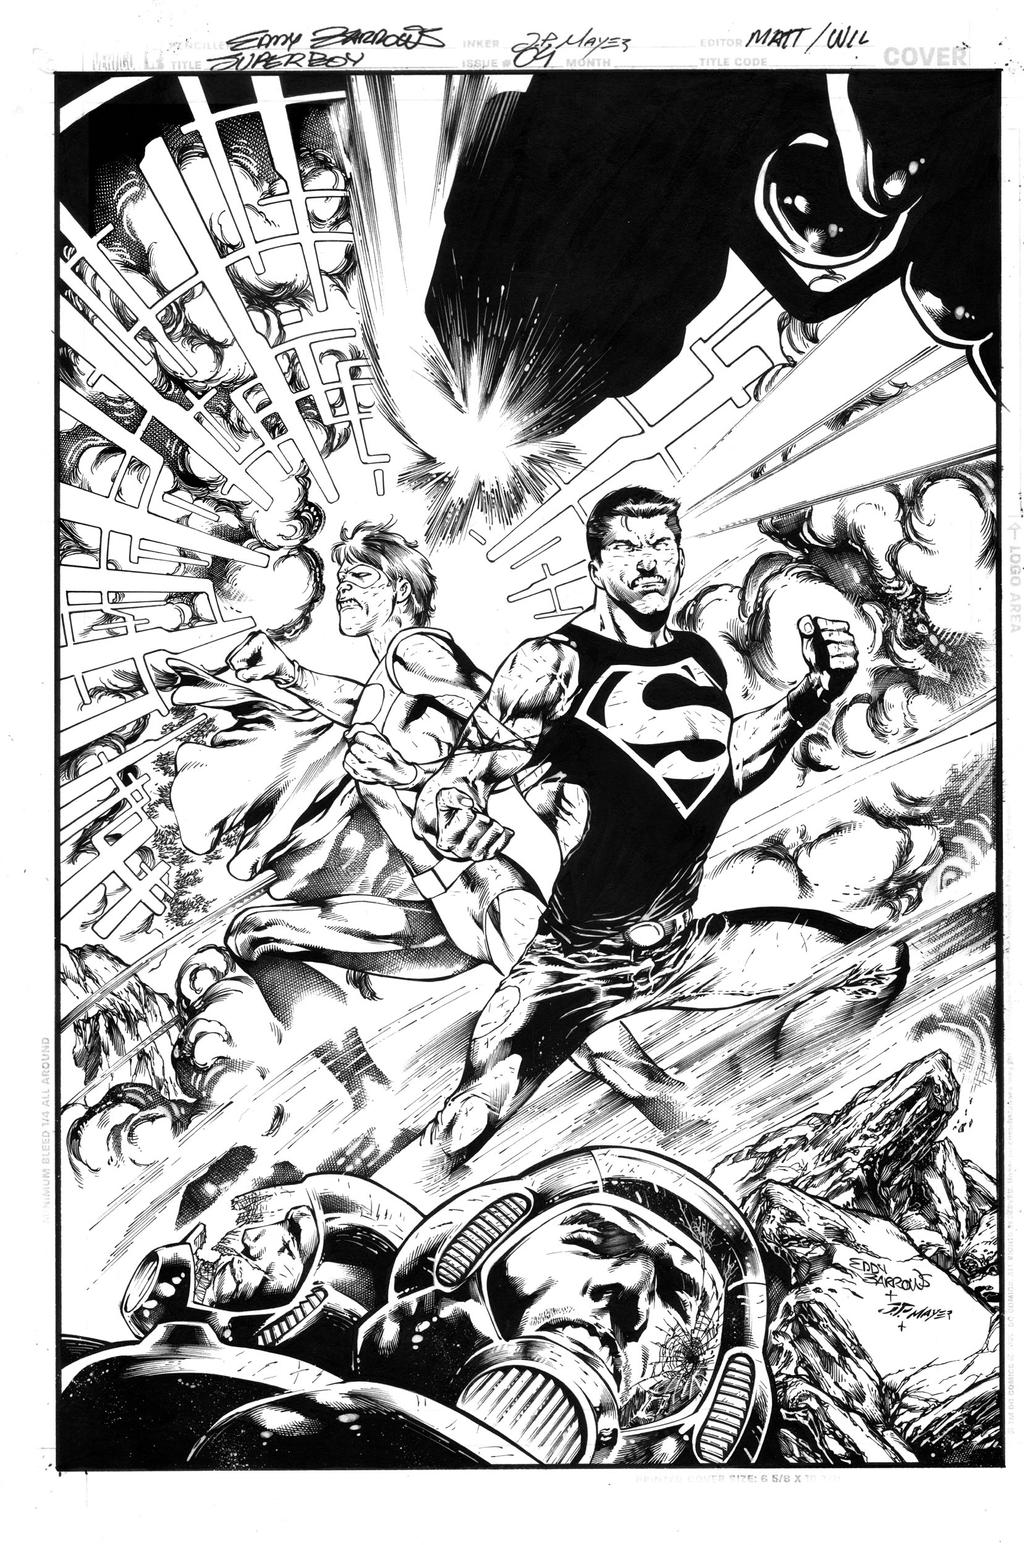 Superboy 04 Cover